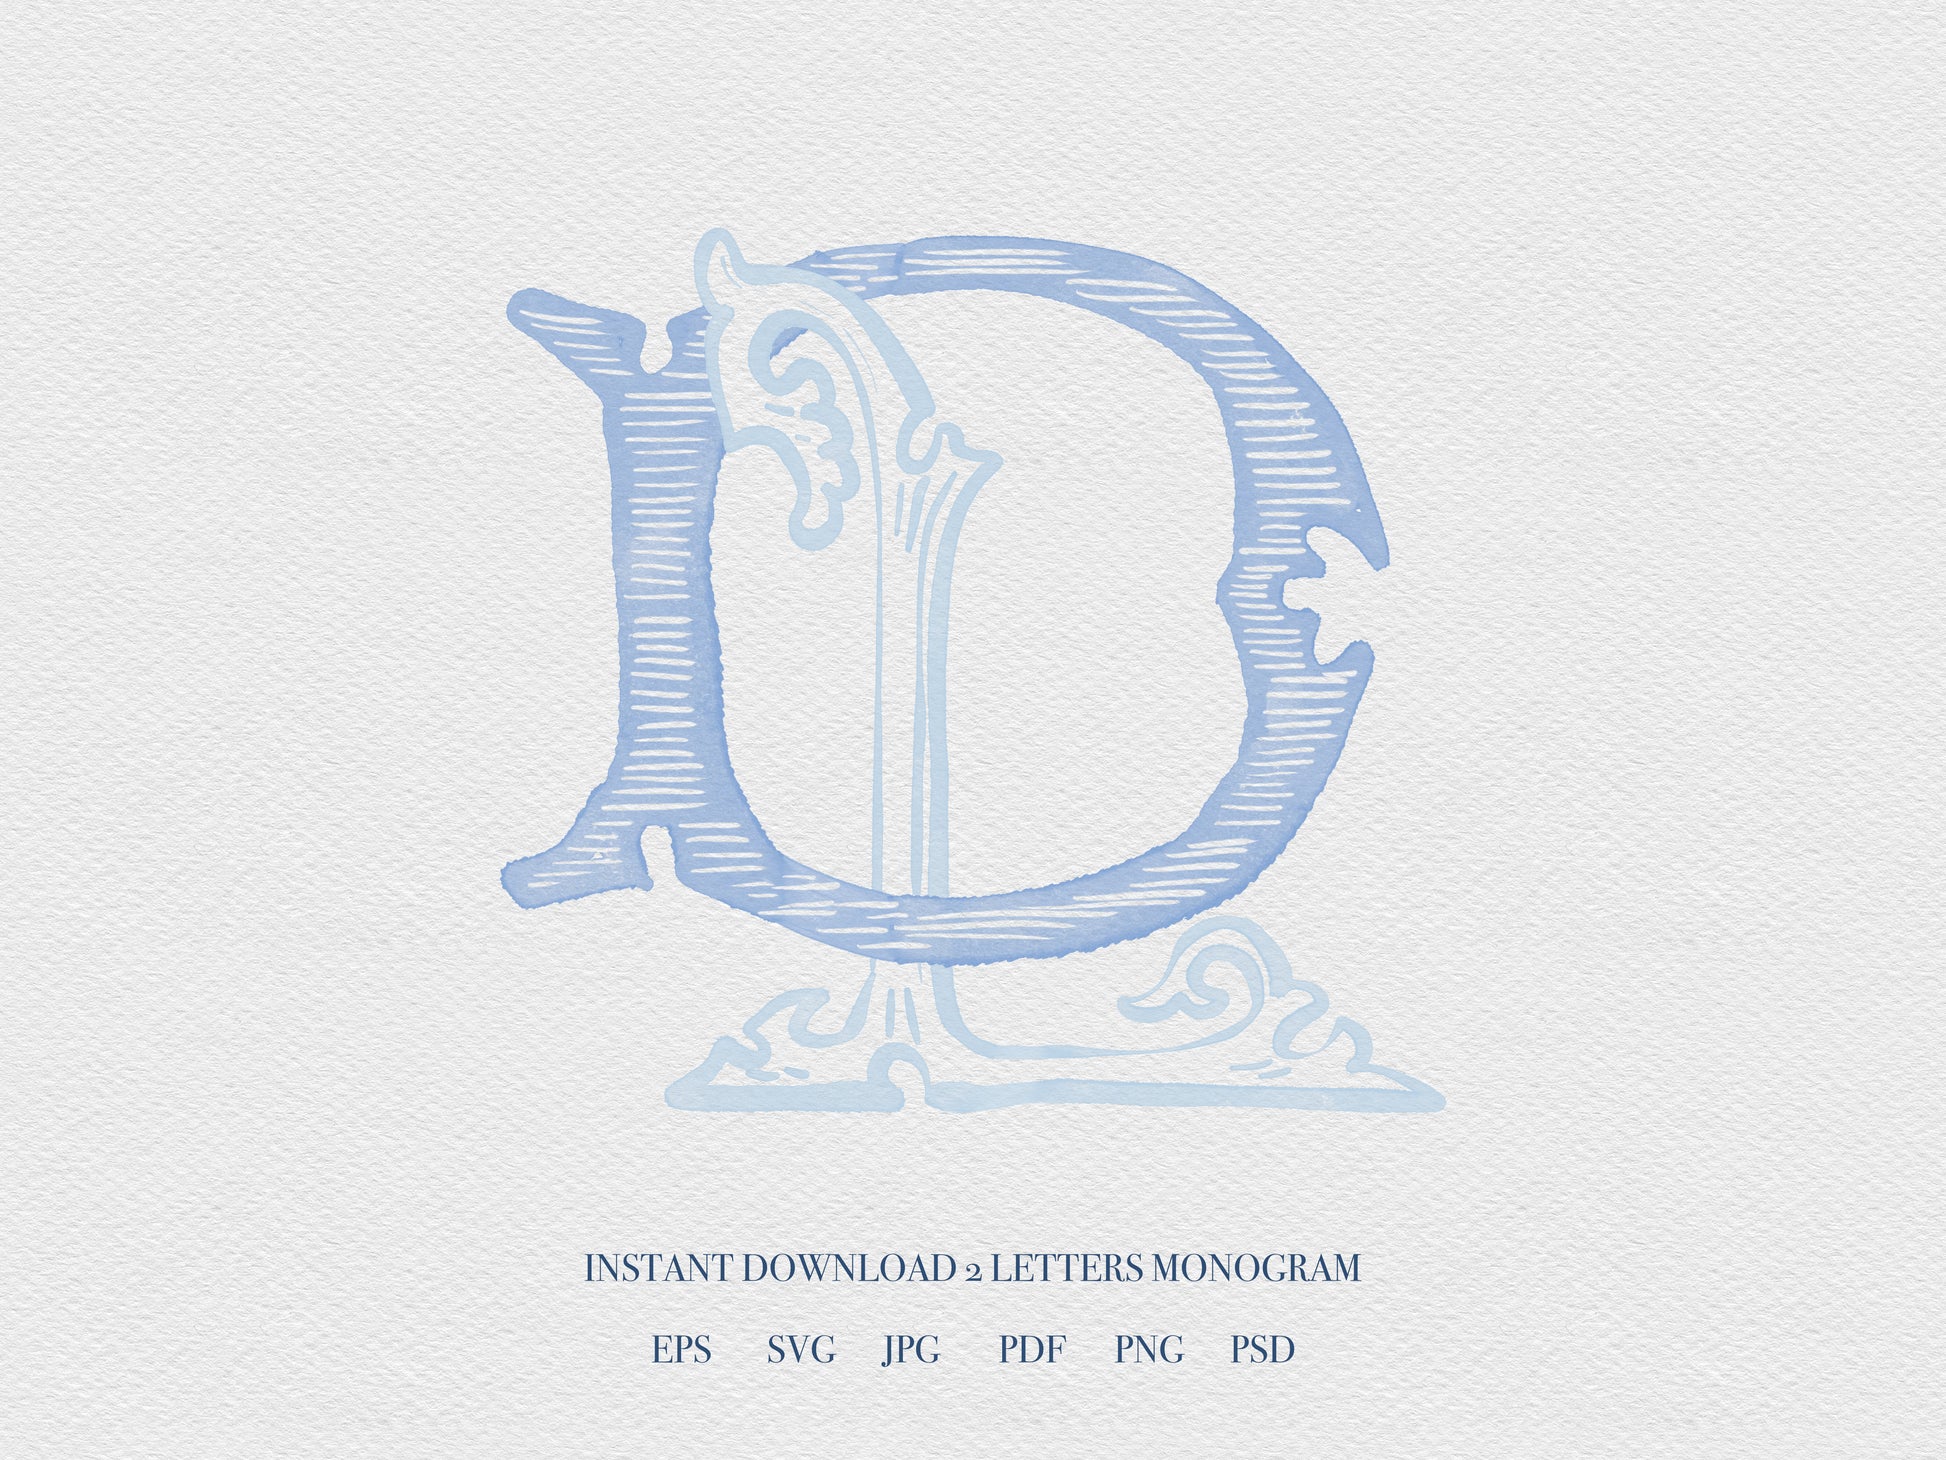 2 Letter Monogram with Letters DL LD | Digital Download - Wedding Monogram SVG, Personal Logo, Wedding Logo for Wedding Invitations The Wedding Crest Lab